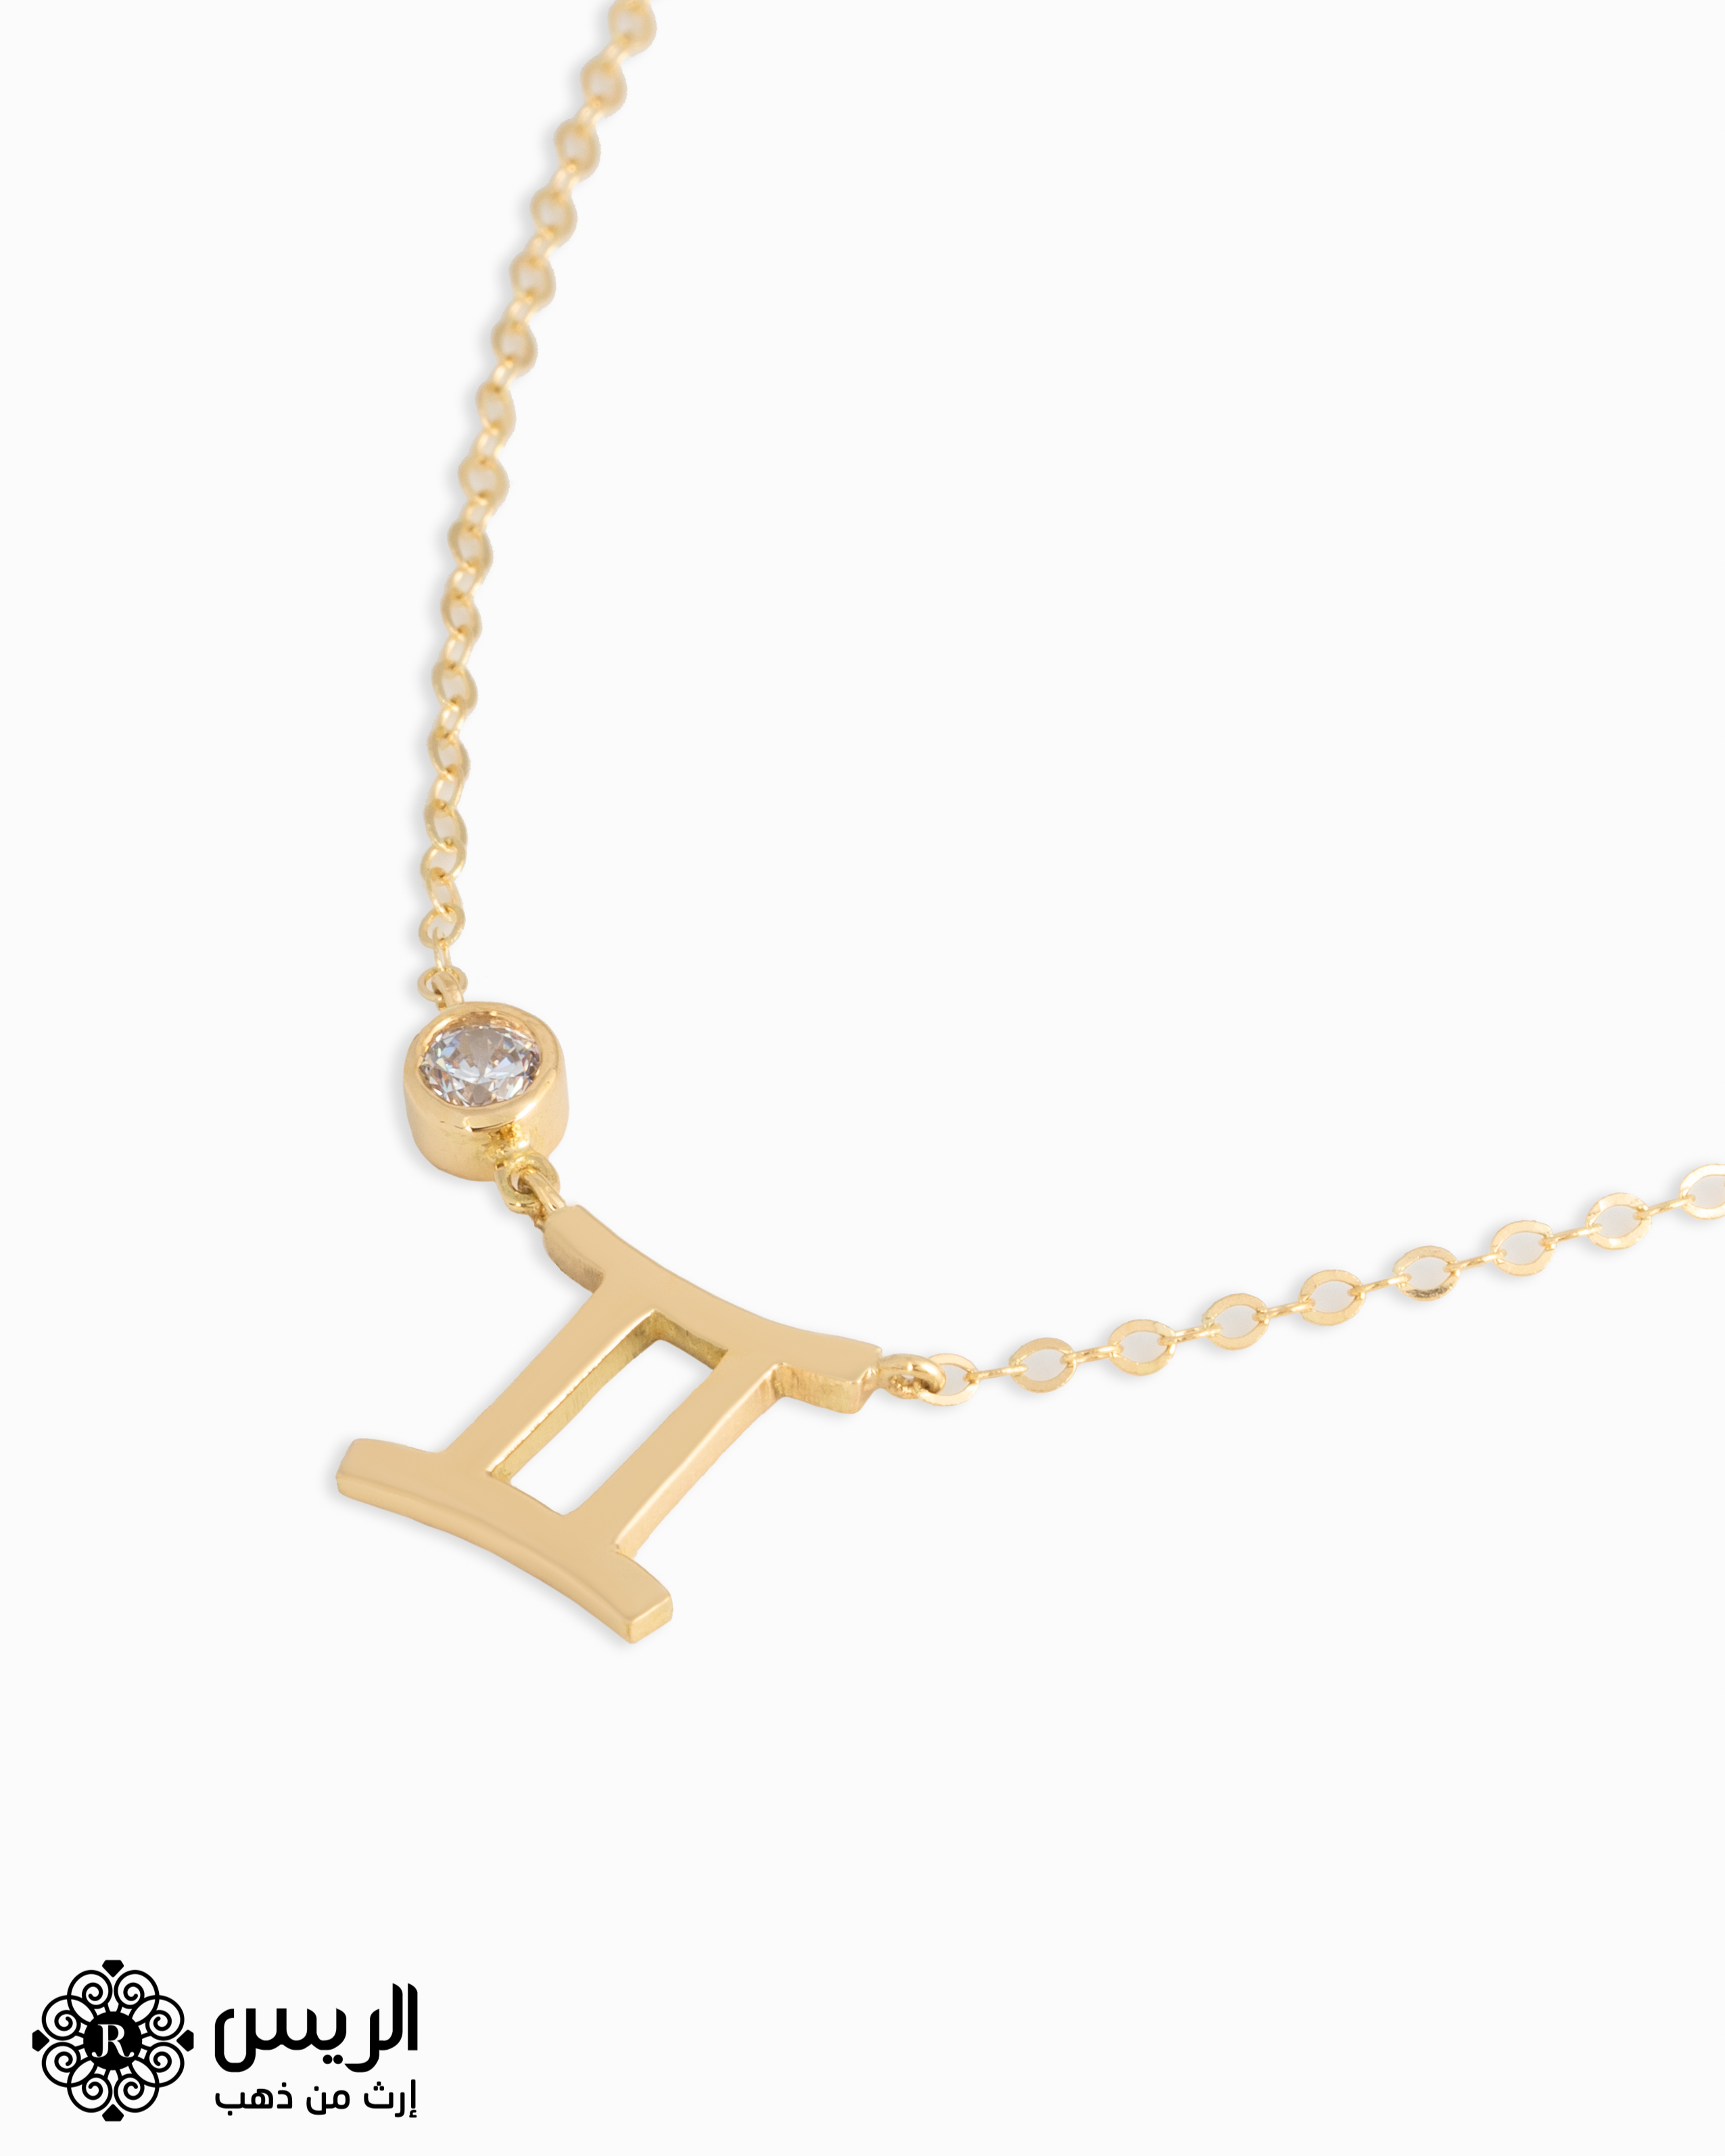 Raies jewelry Gemini Horoscope Pendant تعليقة برج الجوزاء الريس للمجوهرات